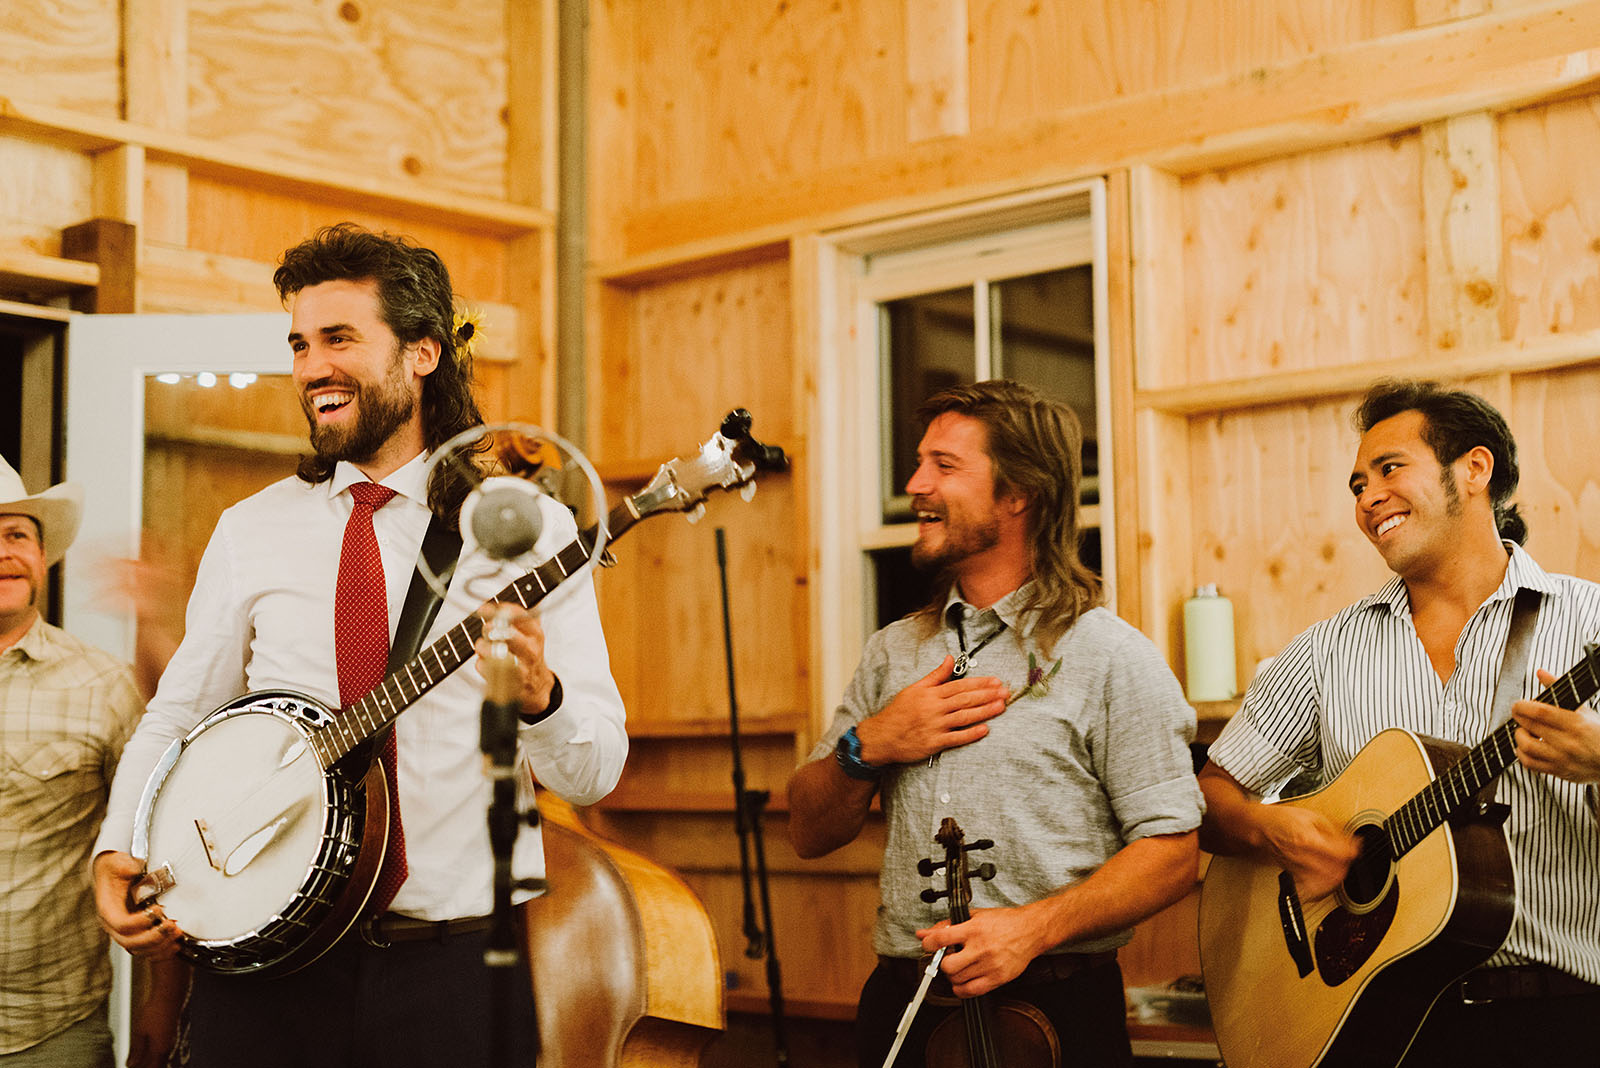 Groom joining the bluegrass musicians | Sauvie Island Wedding